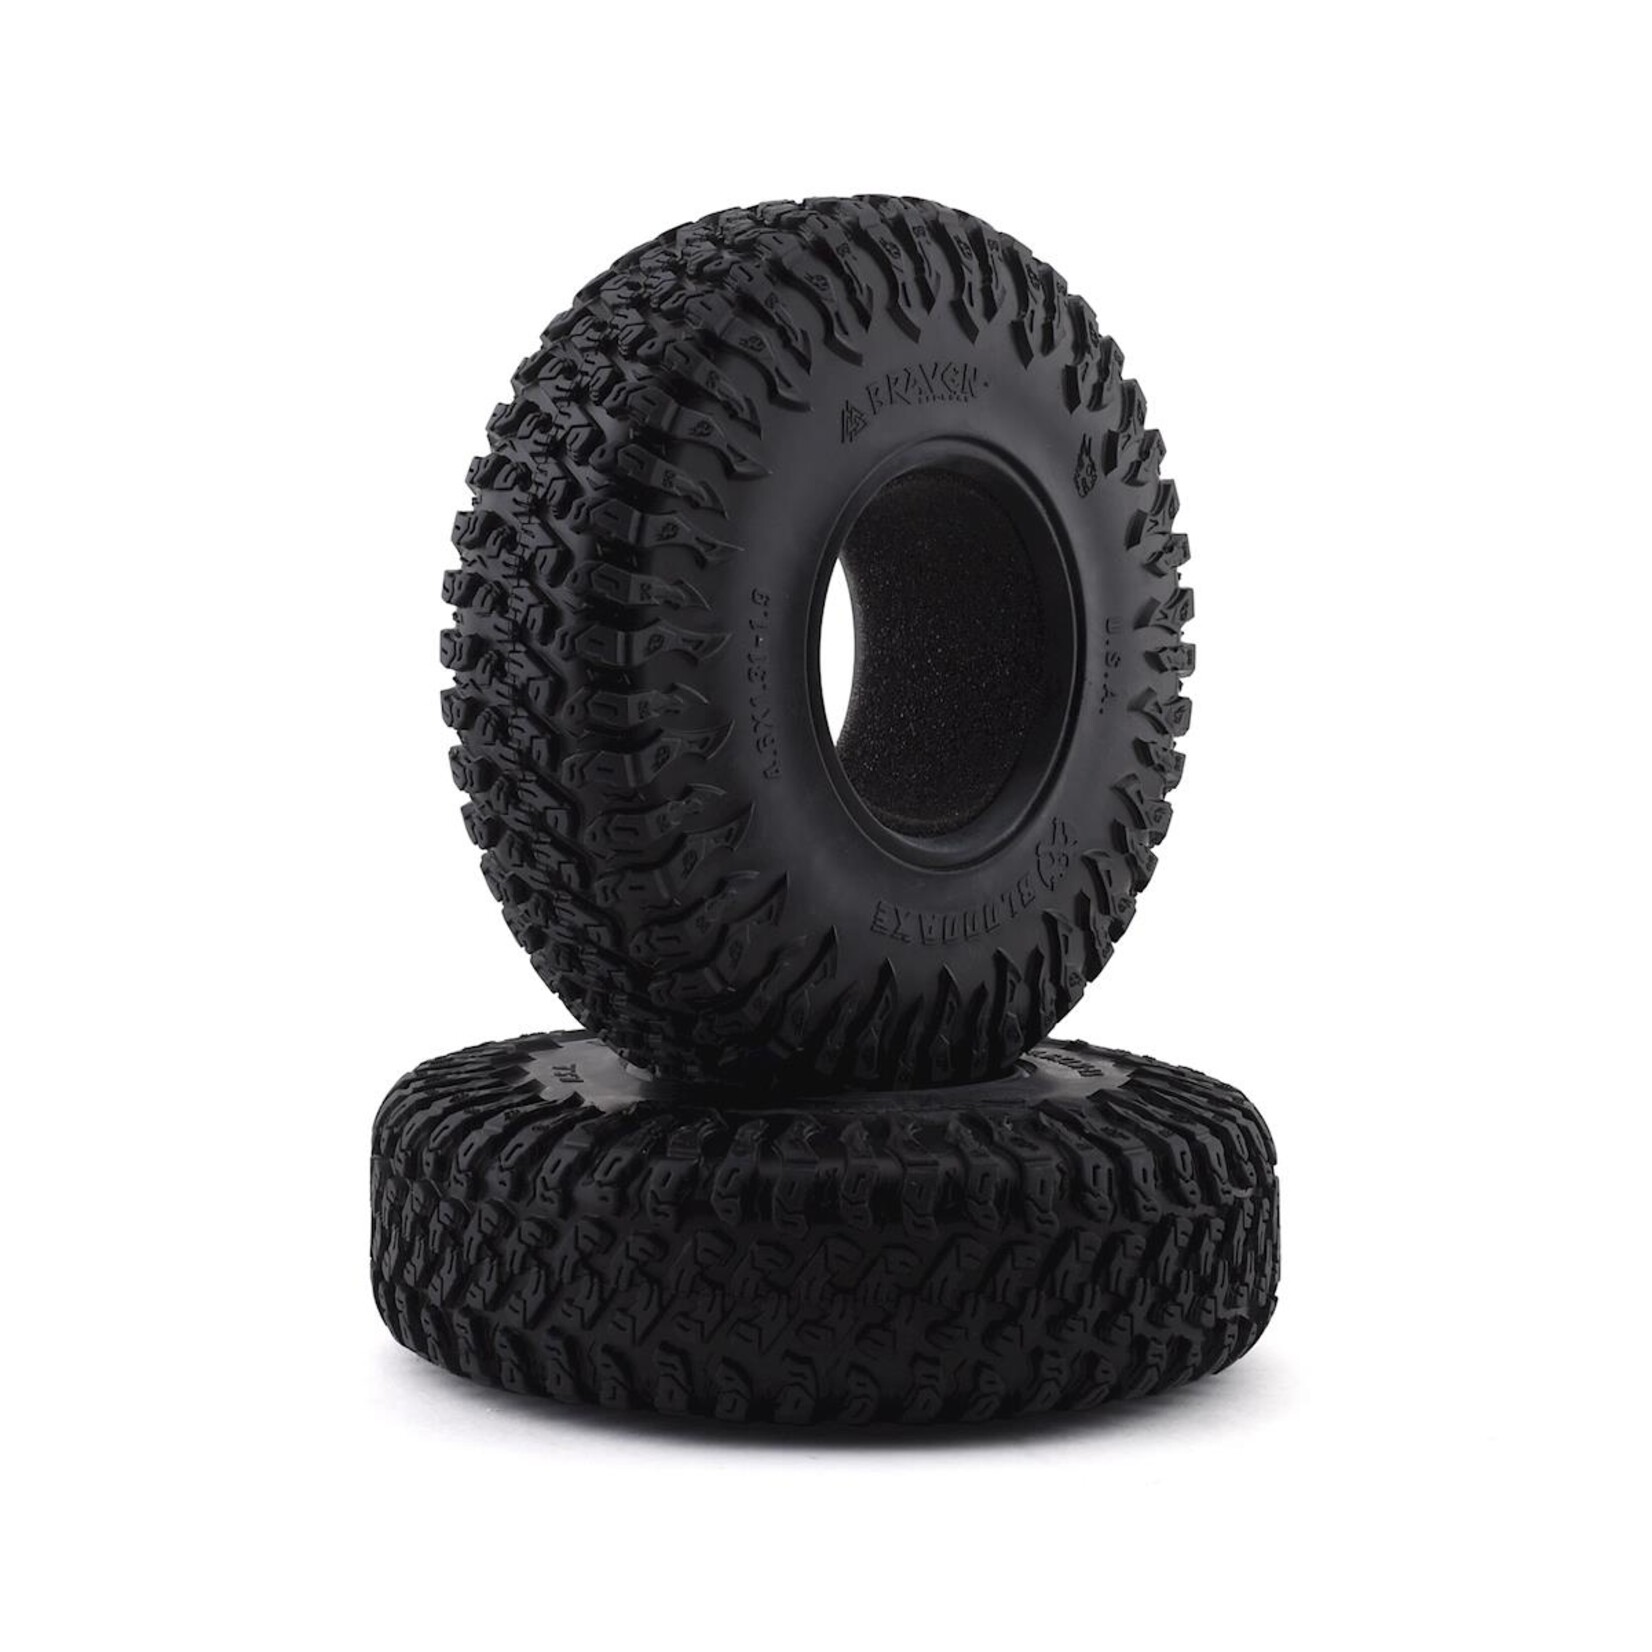 Pit Bull Pit Bull Tires Braven Bloodaxe 1.9" Crawler Tires w/Foam (Alien) #PBTPB9023AK